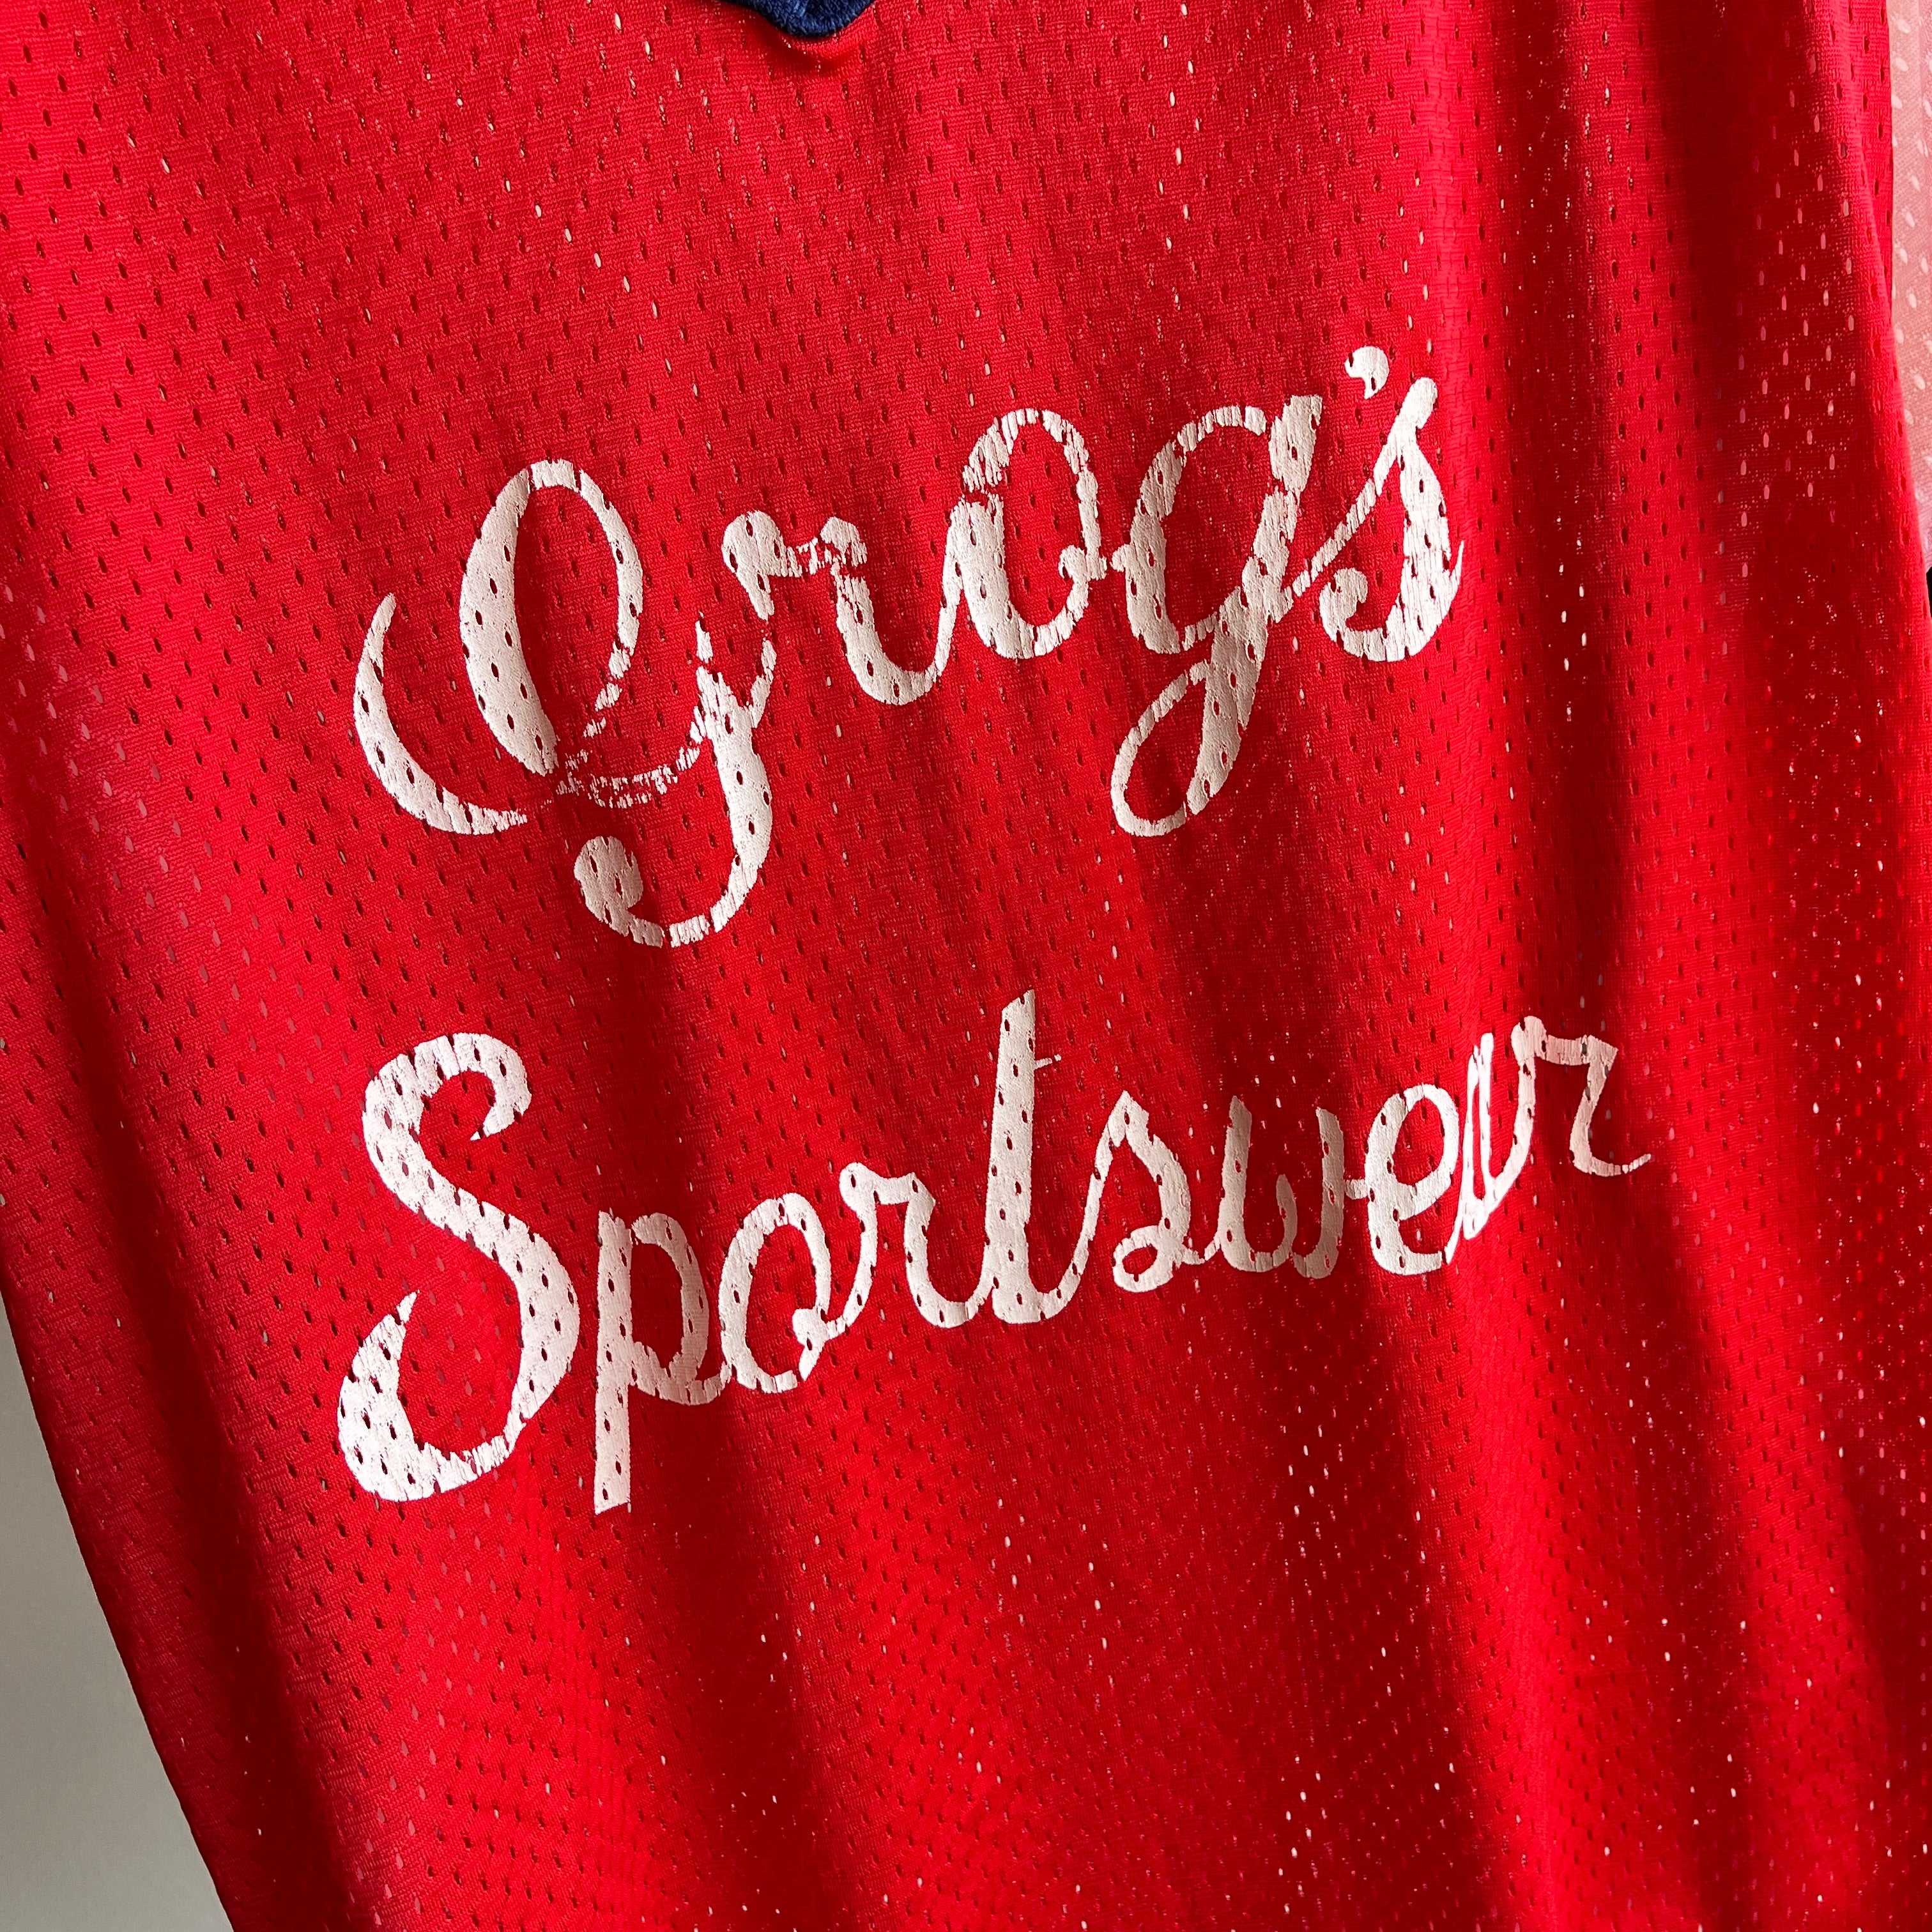 Haut en jersey de nylon Grog's Sportswear des années 1970